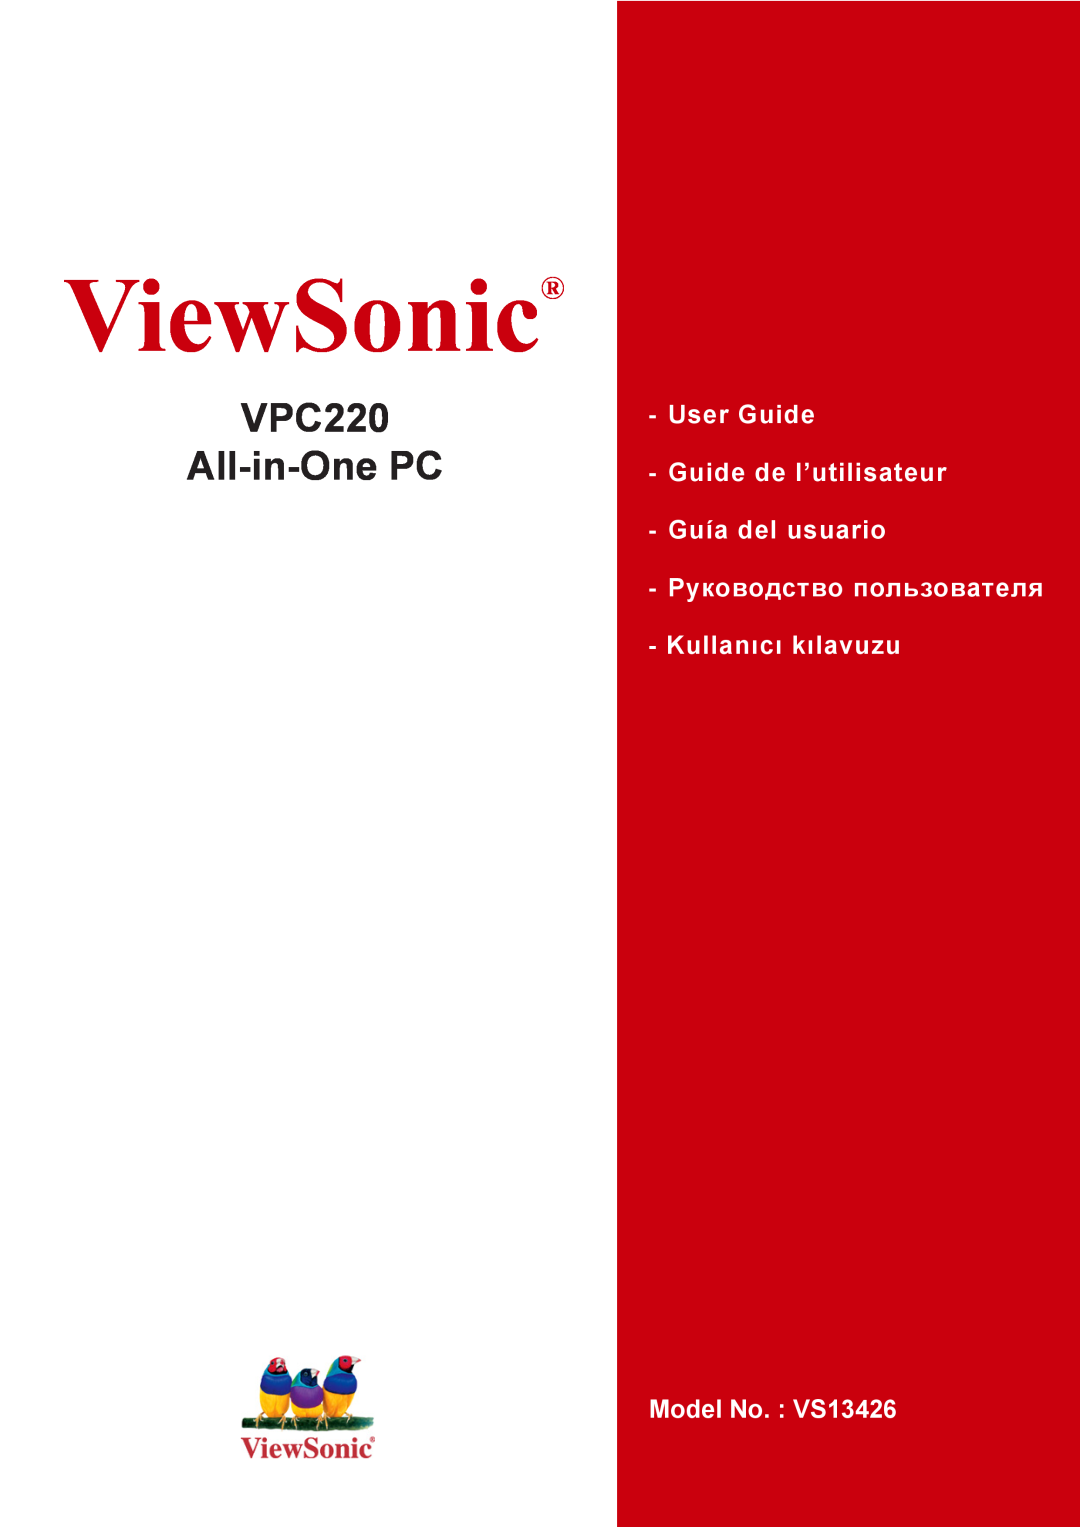 ViewSonic VS13426 manual ViewSonic, VPC220 All-in-One PC, User Guide Guide de l’utilisateur Guía del usuario 